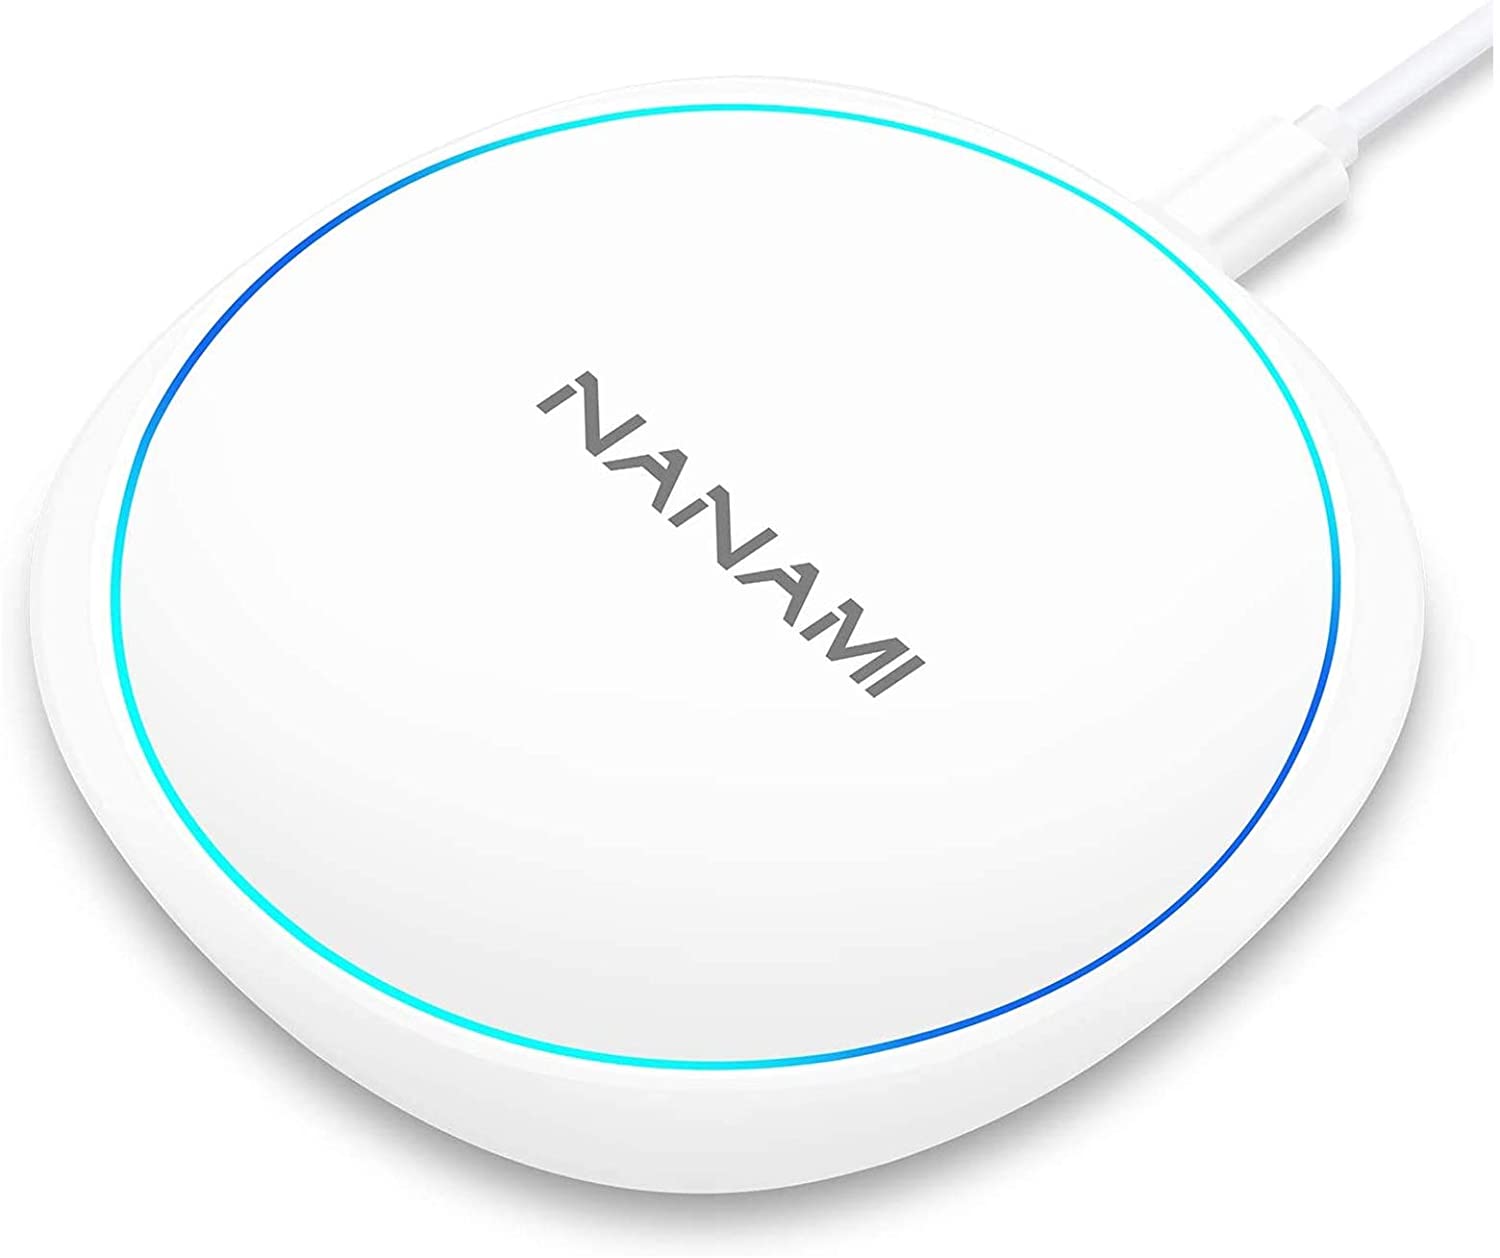 NANAMI Wireless Charger